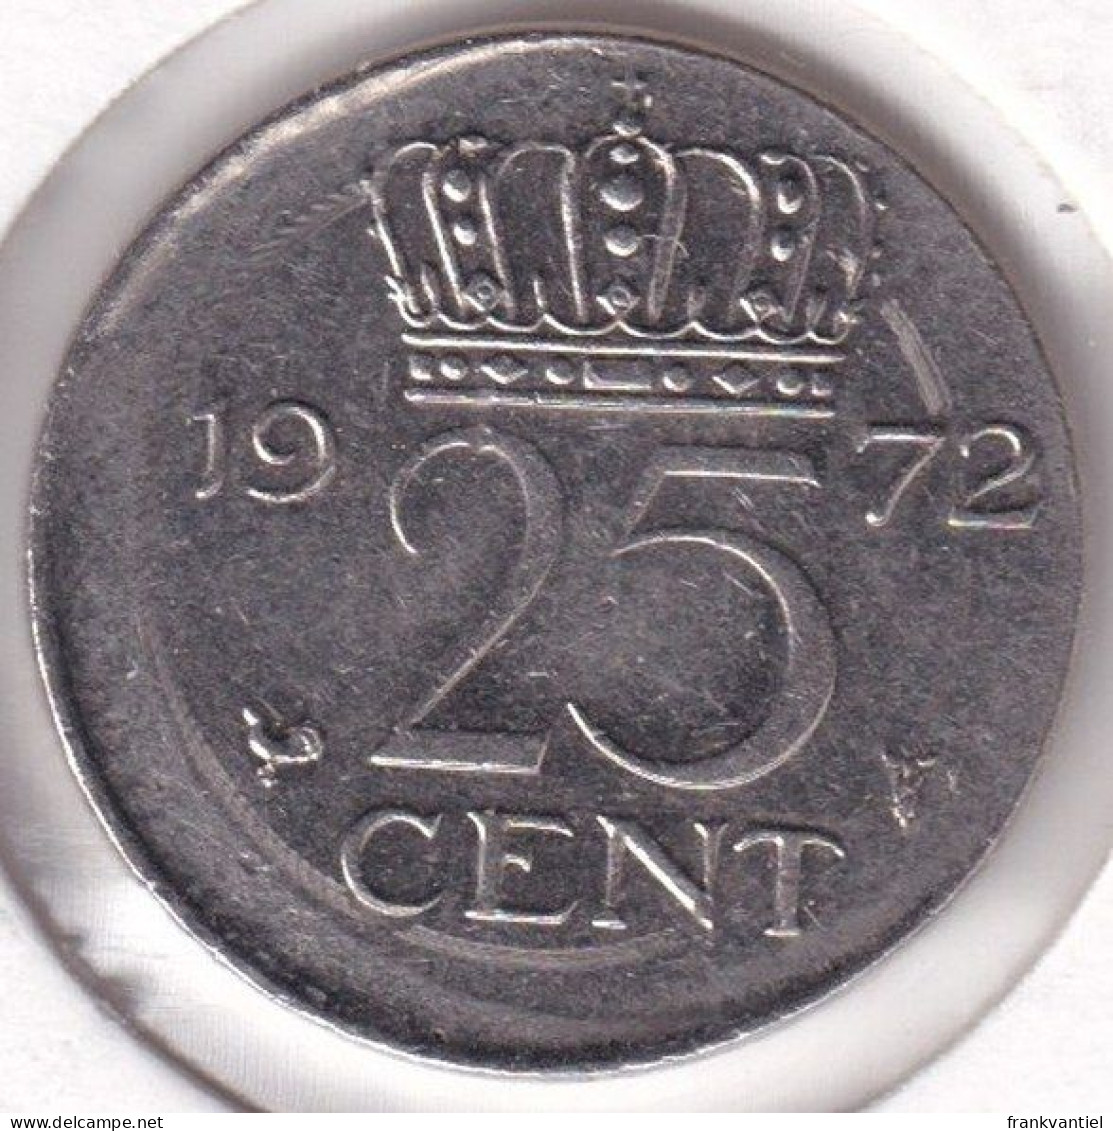 Nederland / Netherlands KM-183 25 Cent 1972 Error Off Center Strike - Essays & New Minting